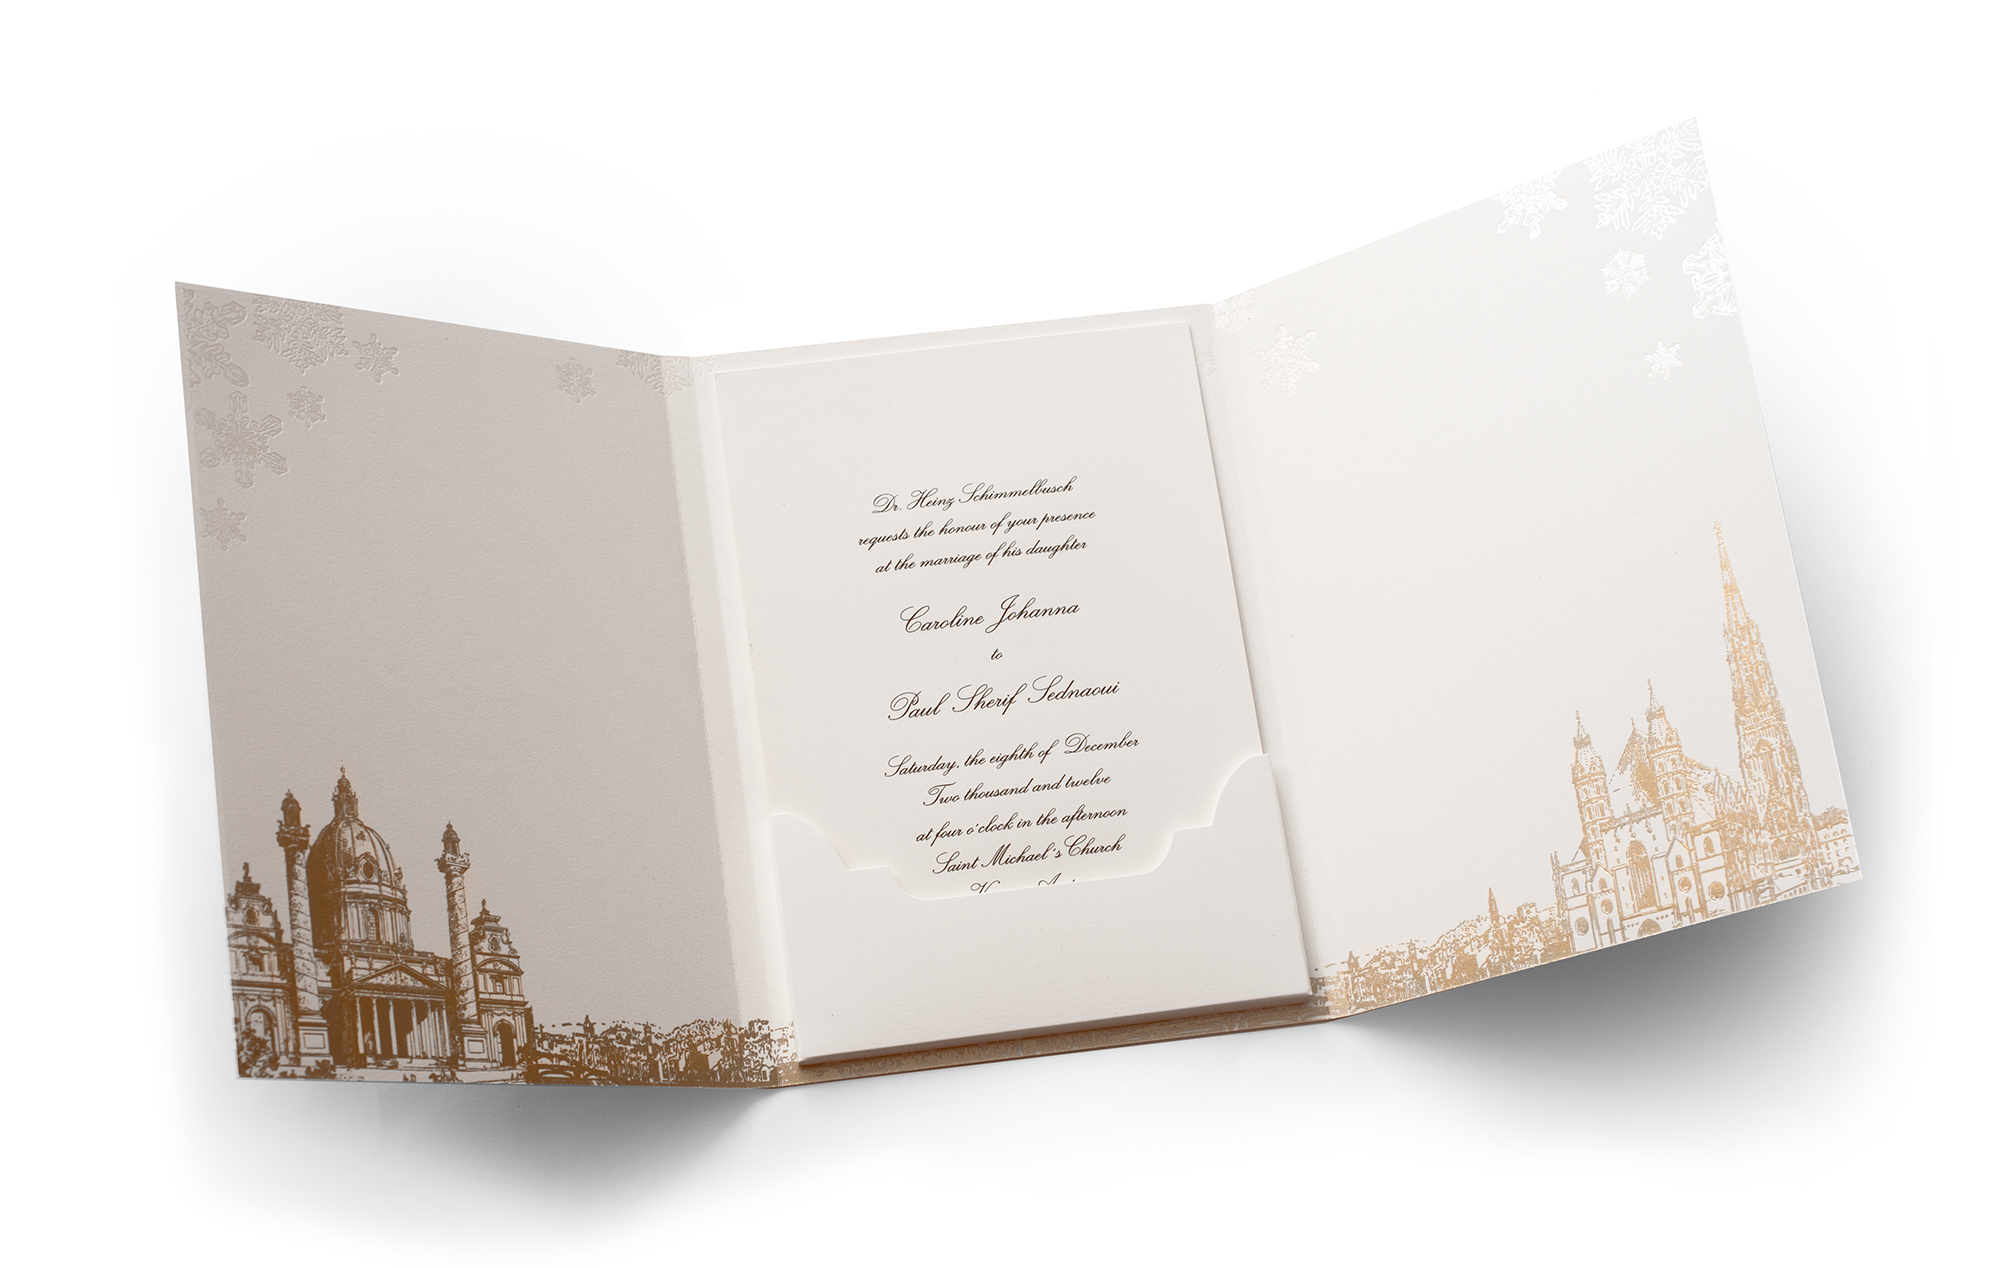 Formal engraved wedding invitation